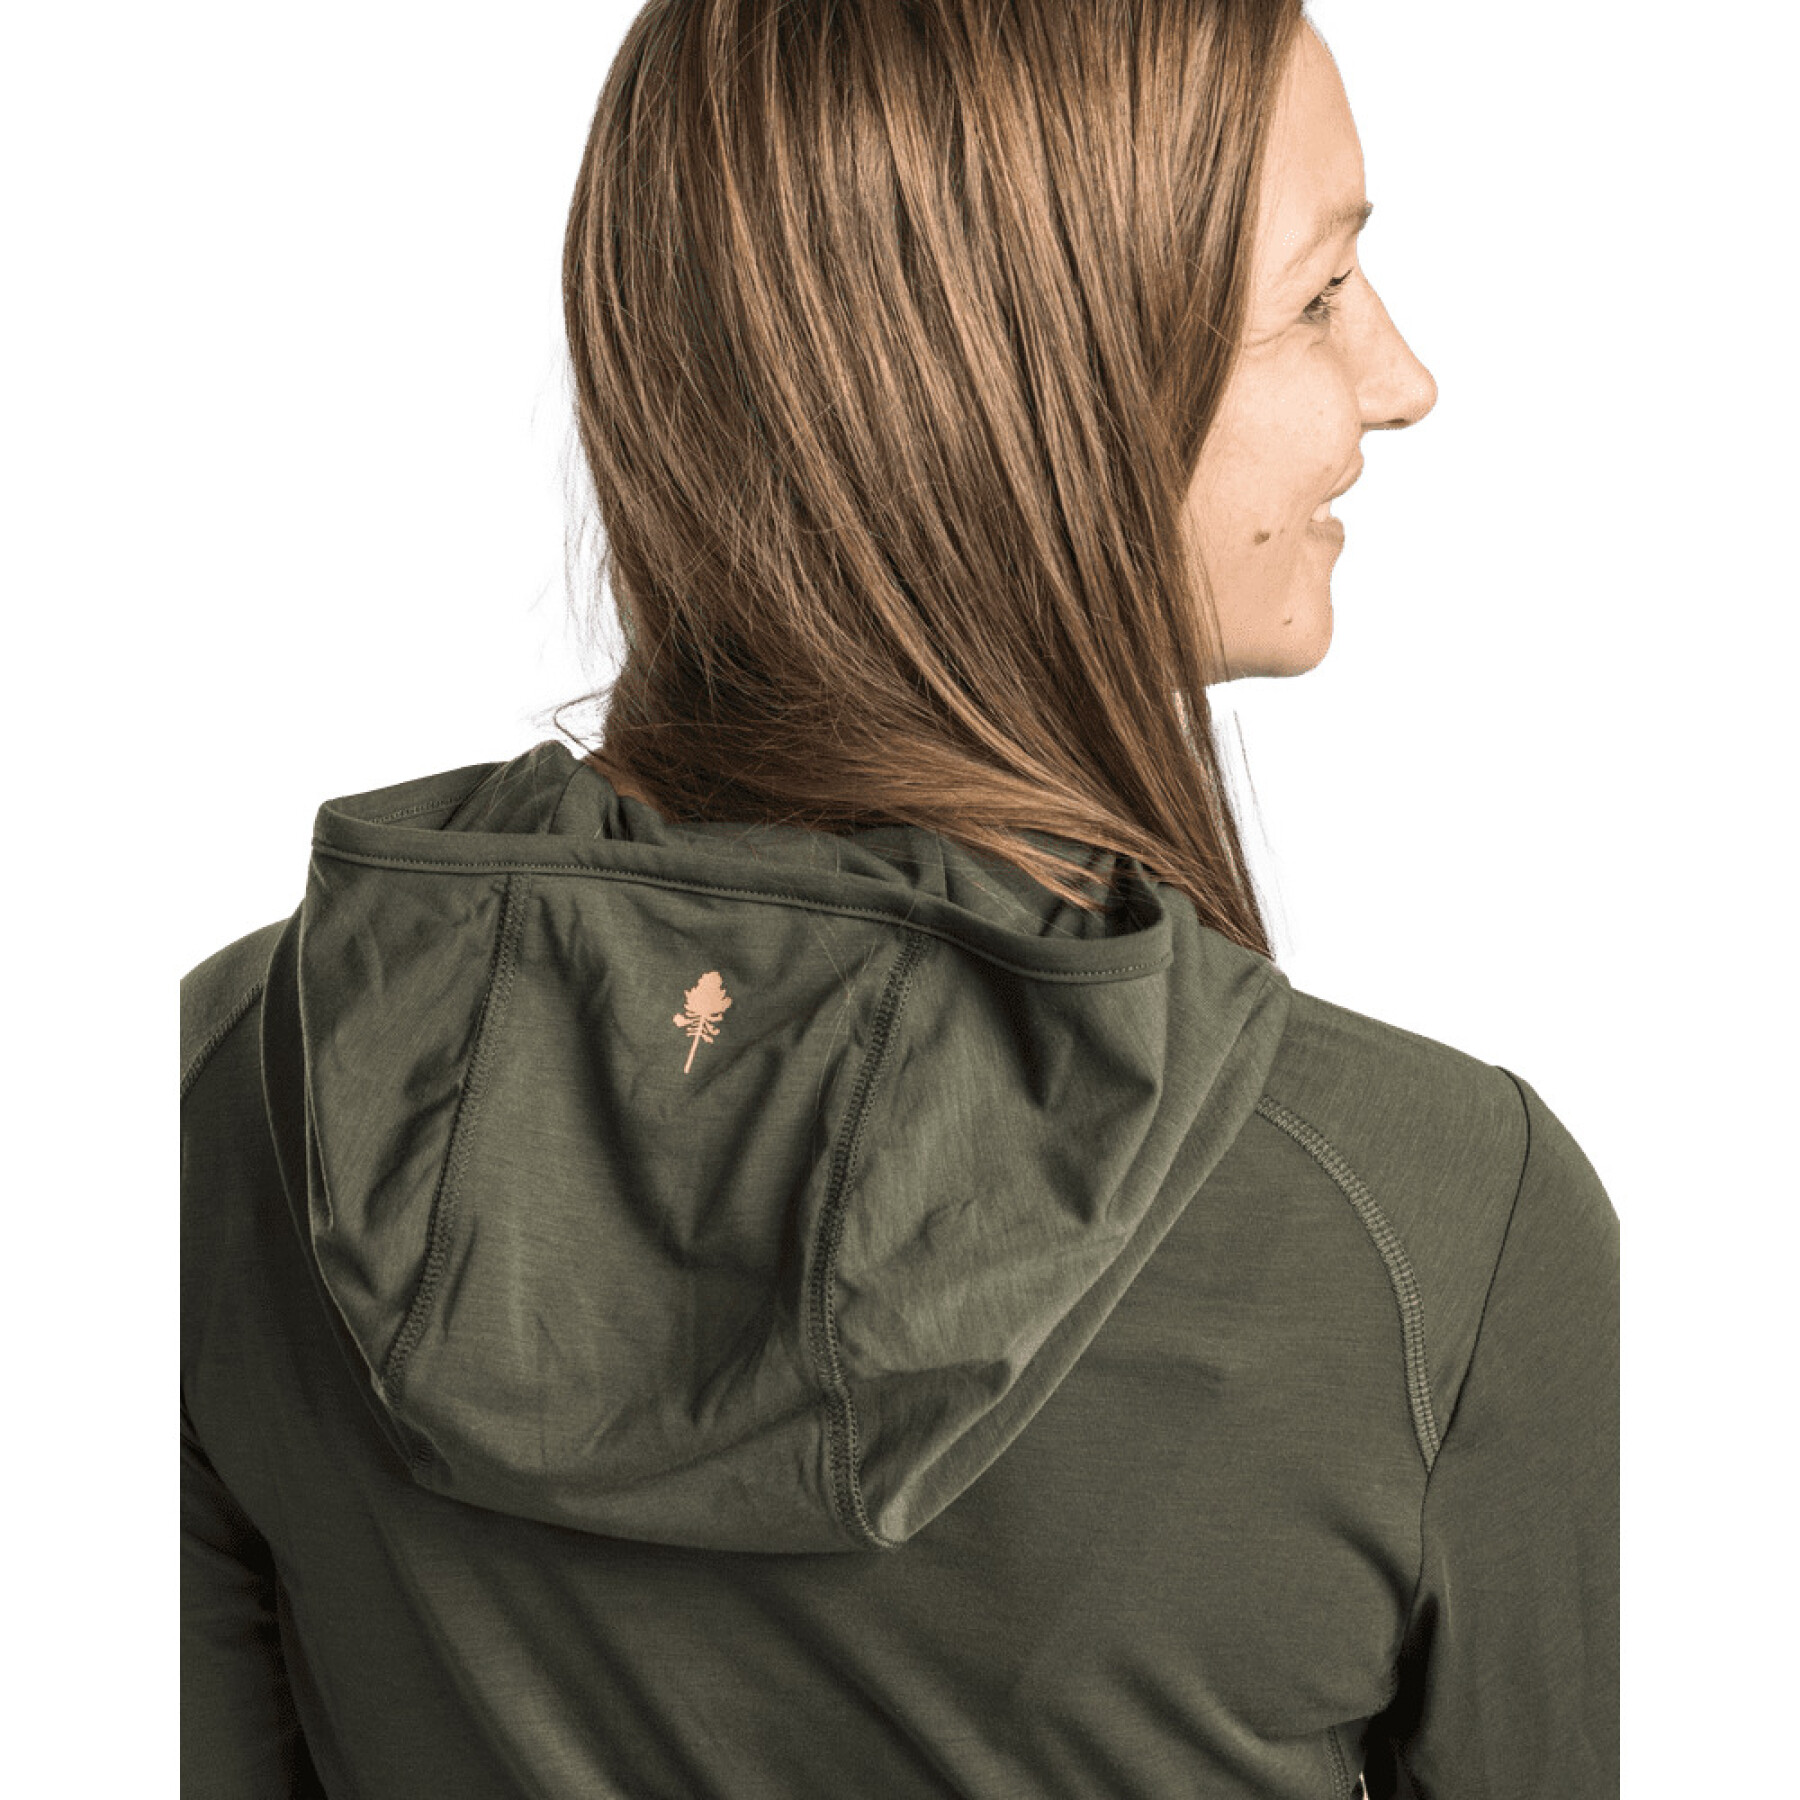 Camisola com capuz para mulher Pinewood InsectSafe Function